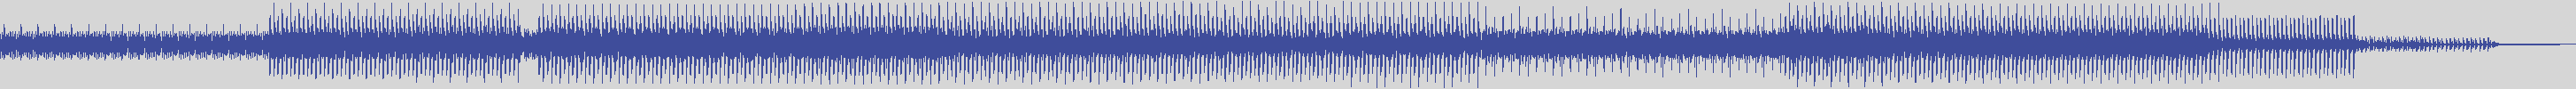 nf_boyz_records [NFY055] Alphonzo King - Tunner [Tribe Edit] audio wave form